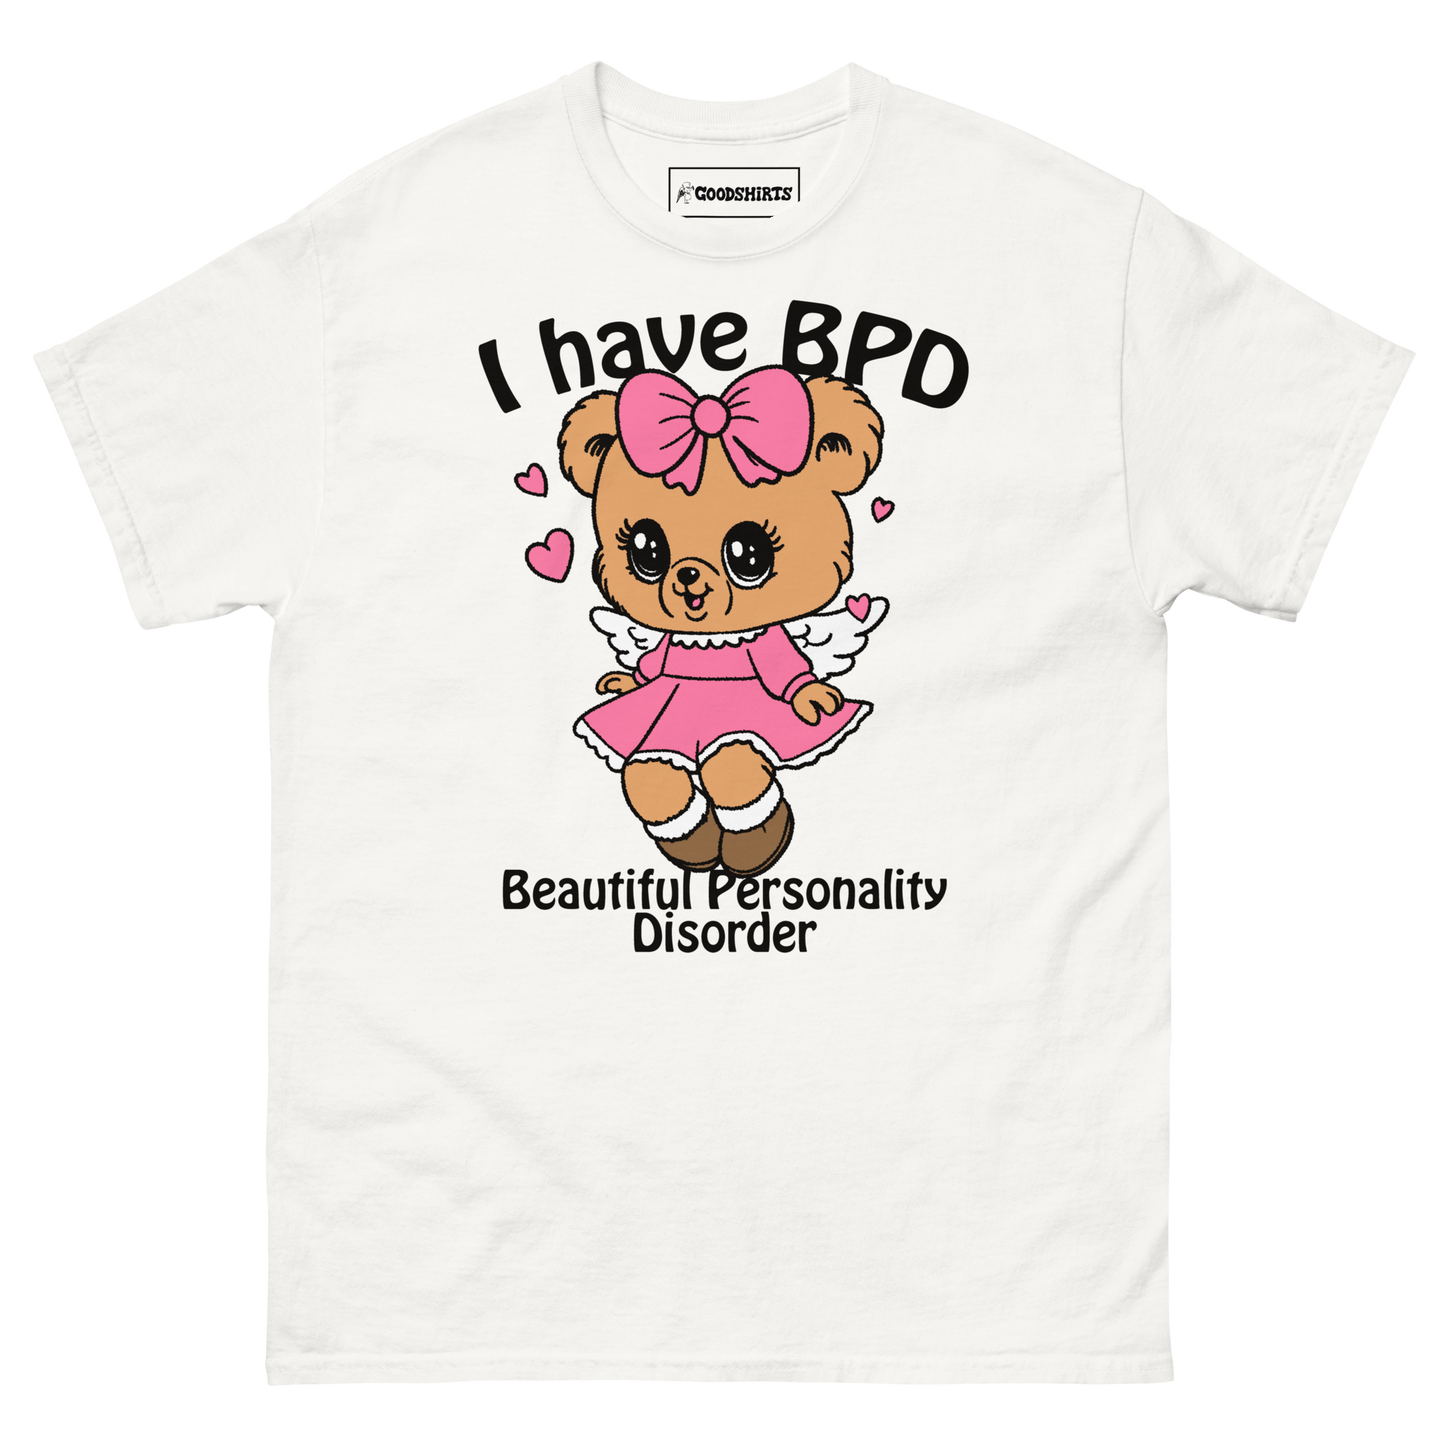 I Have BPD Beautiful Personality Disorder.